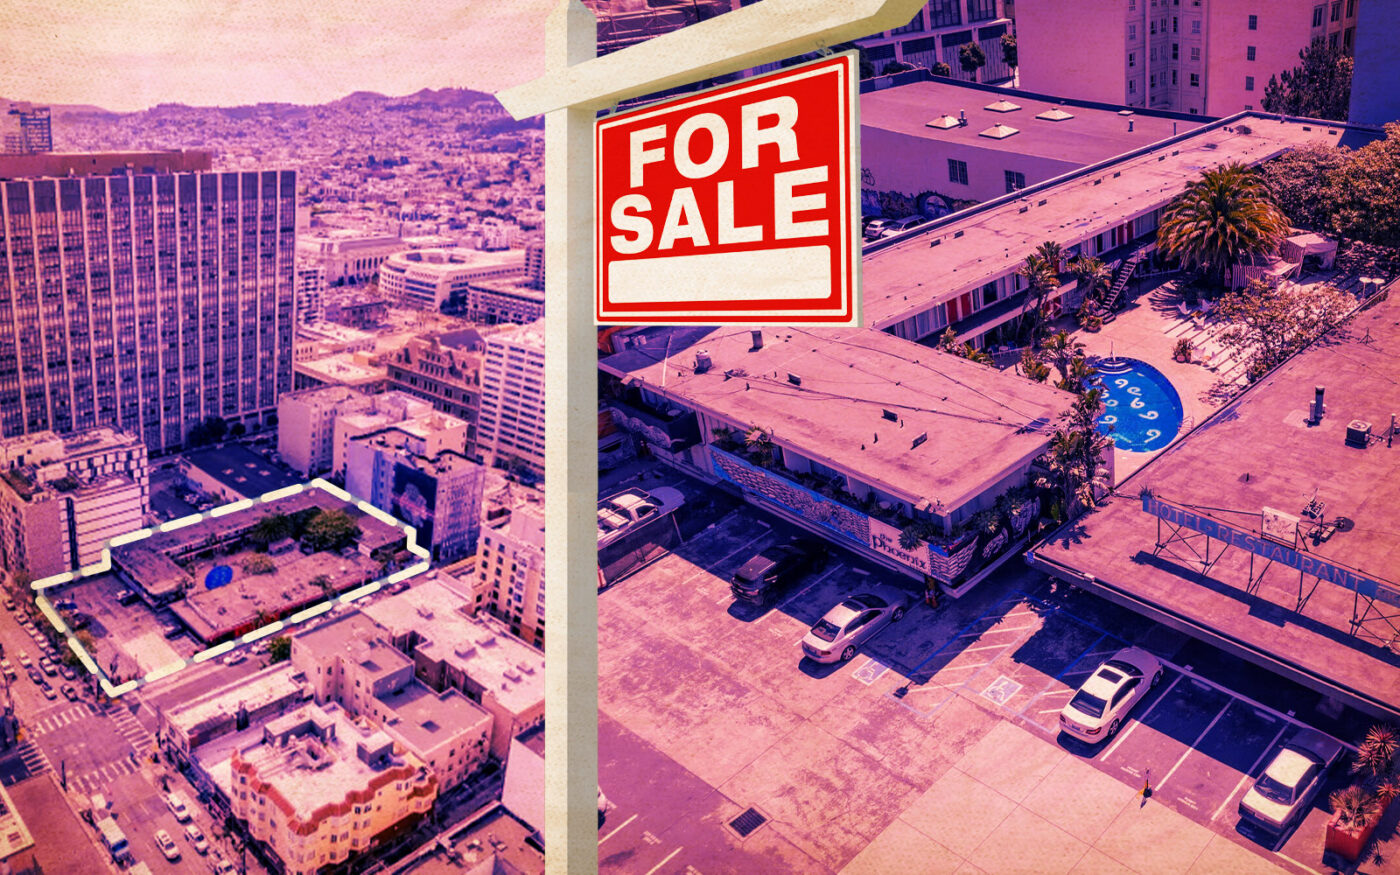 Rockstar Hangout Phoenix Hotel in SF Has “For Sale” Sign